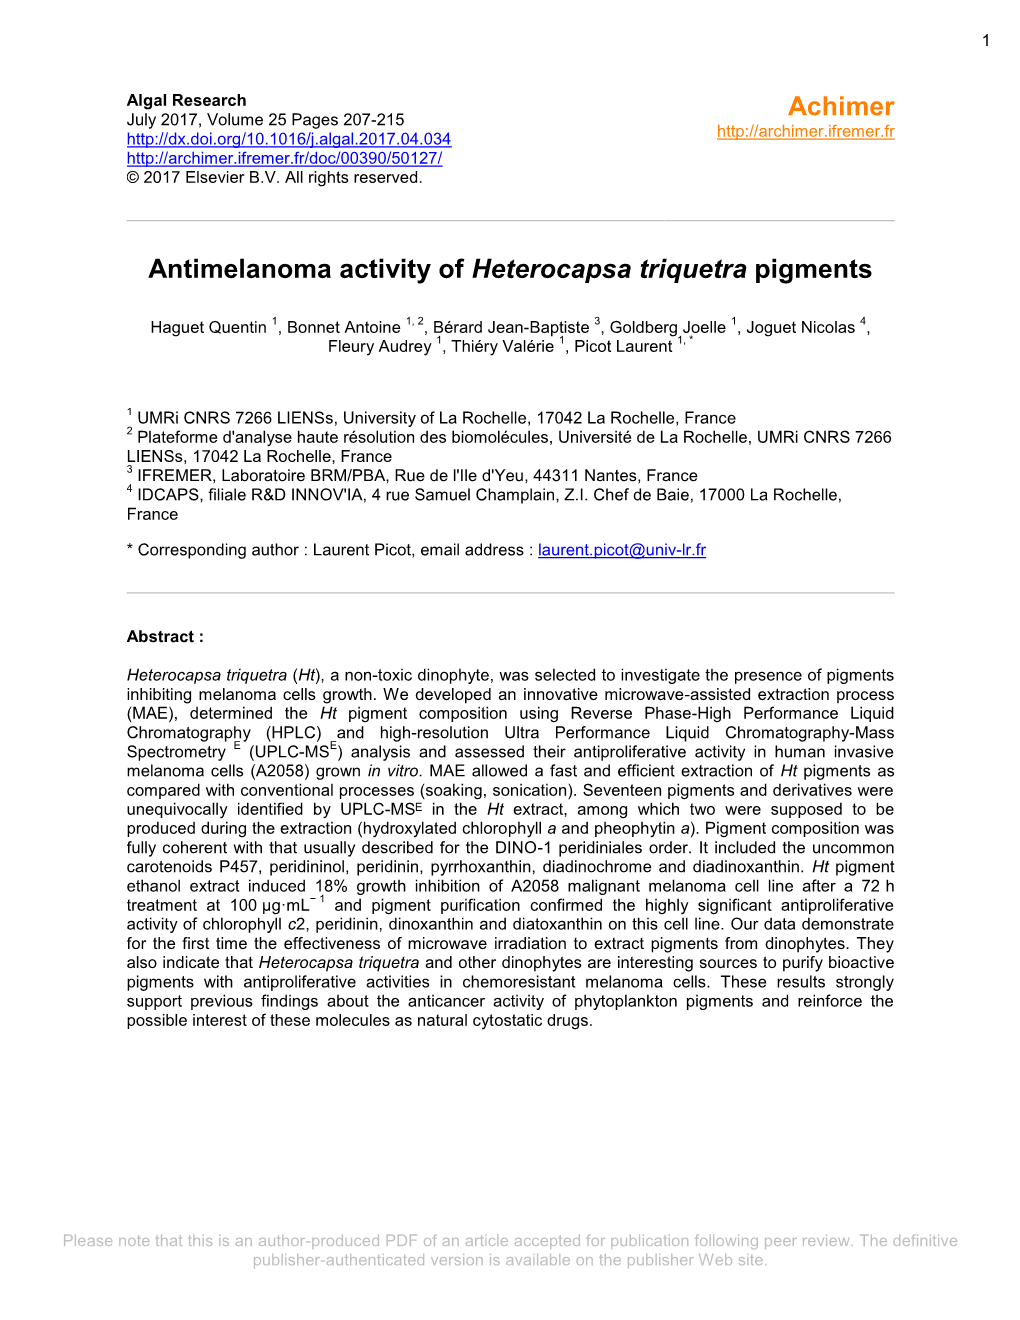 Antimelanoma Activity of Heterocapsa Triquetra Pigments